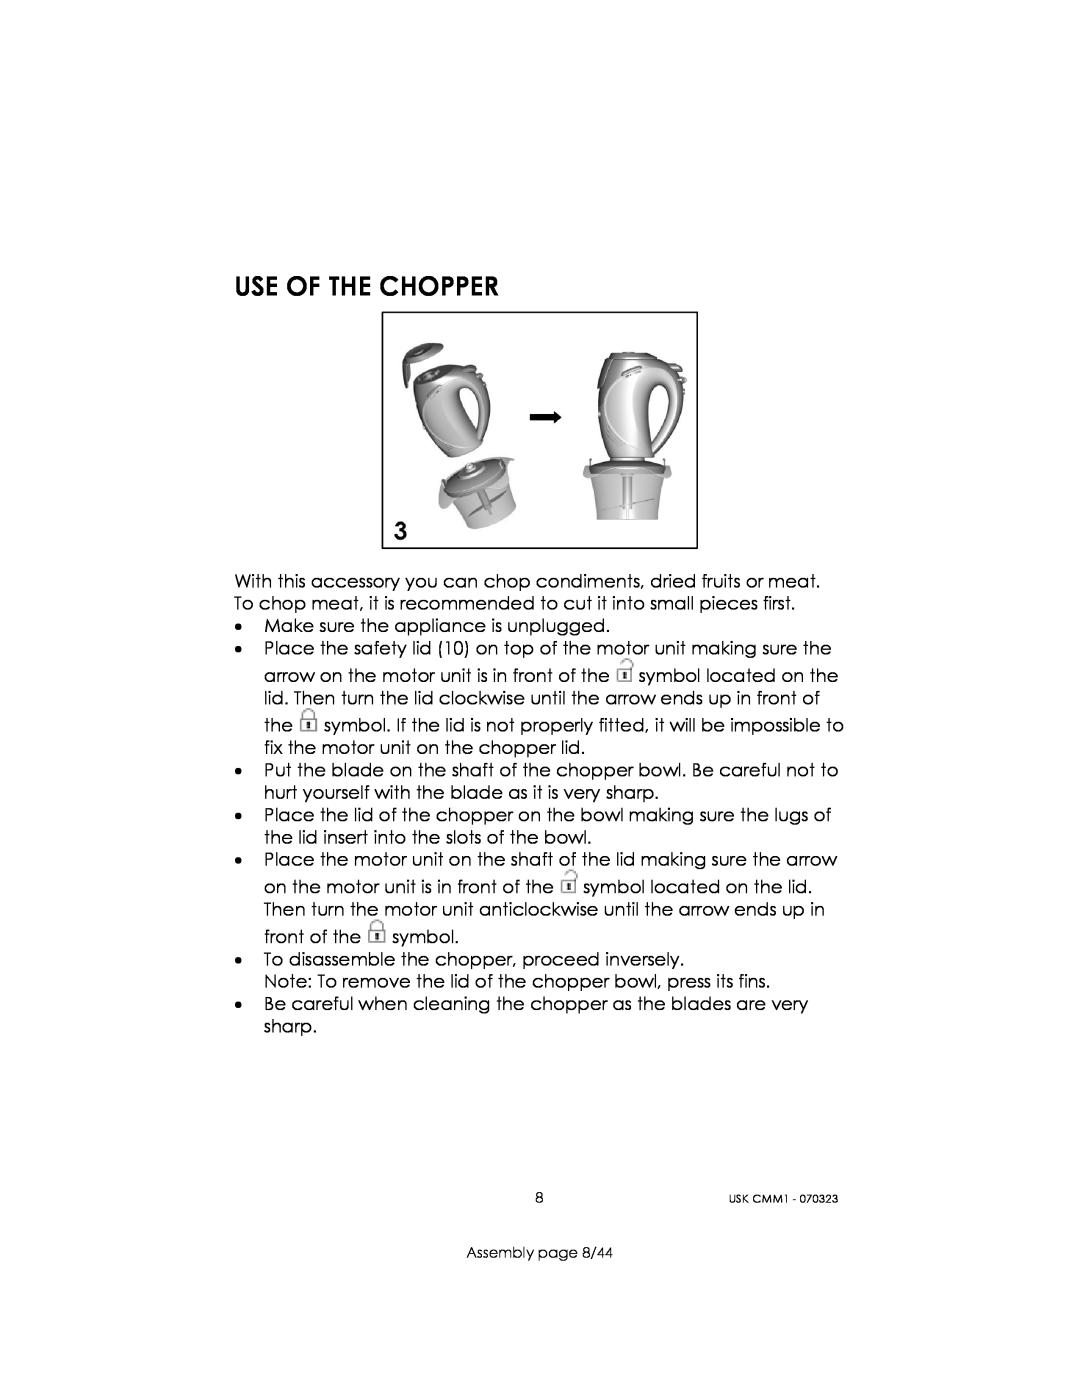 Kalorik USK CMM 1 manual Use Of The Chopper, Assembly page 8/44 